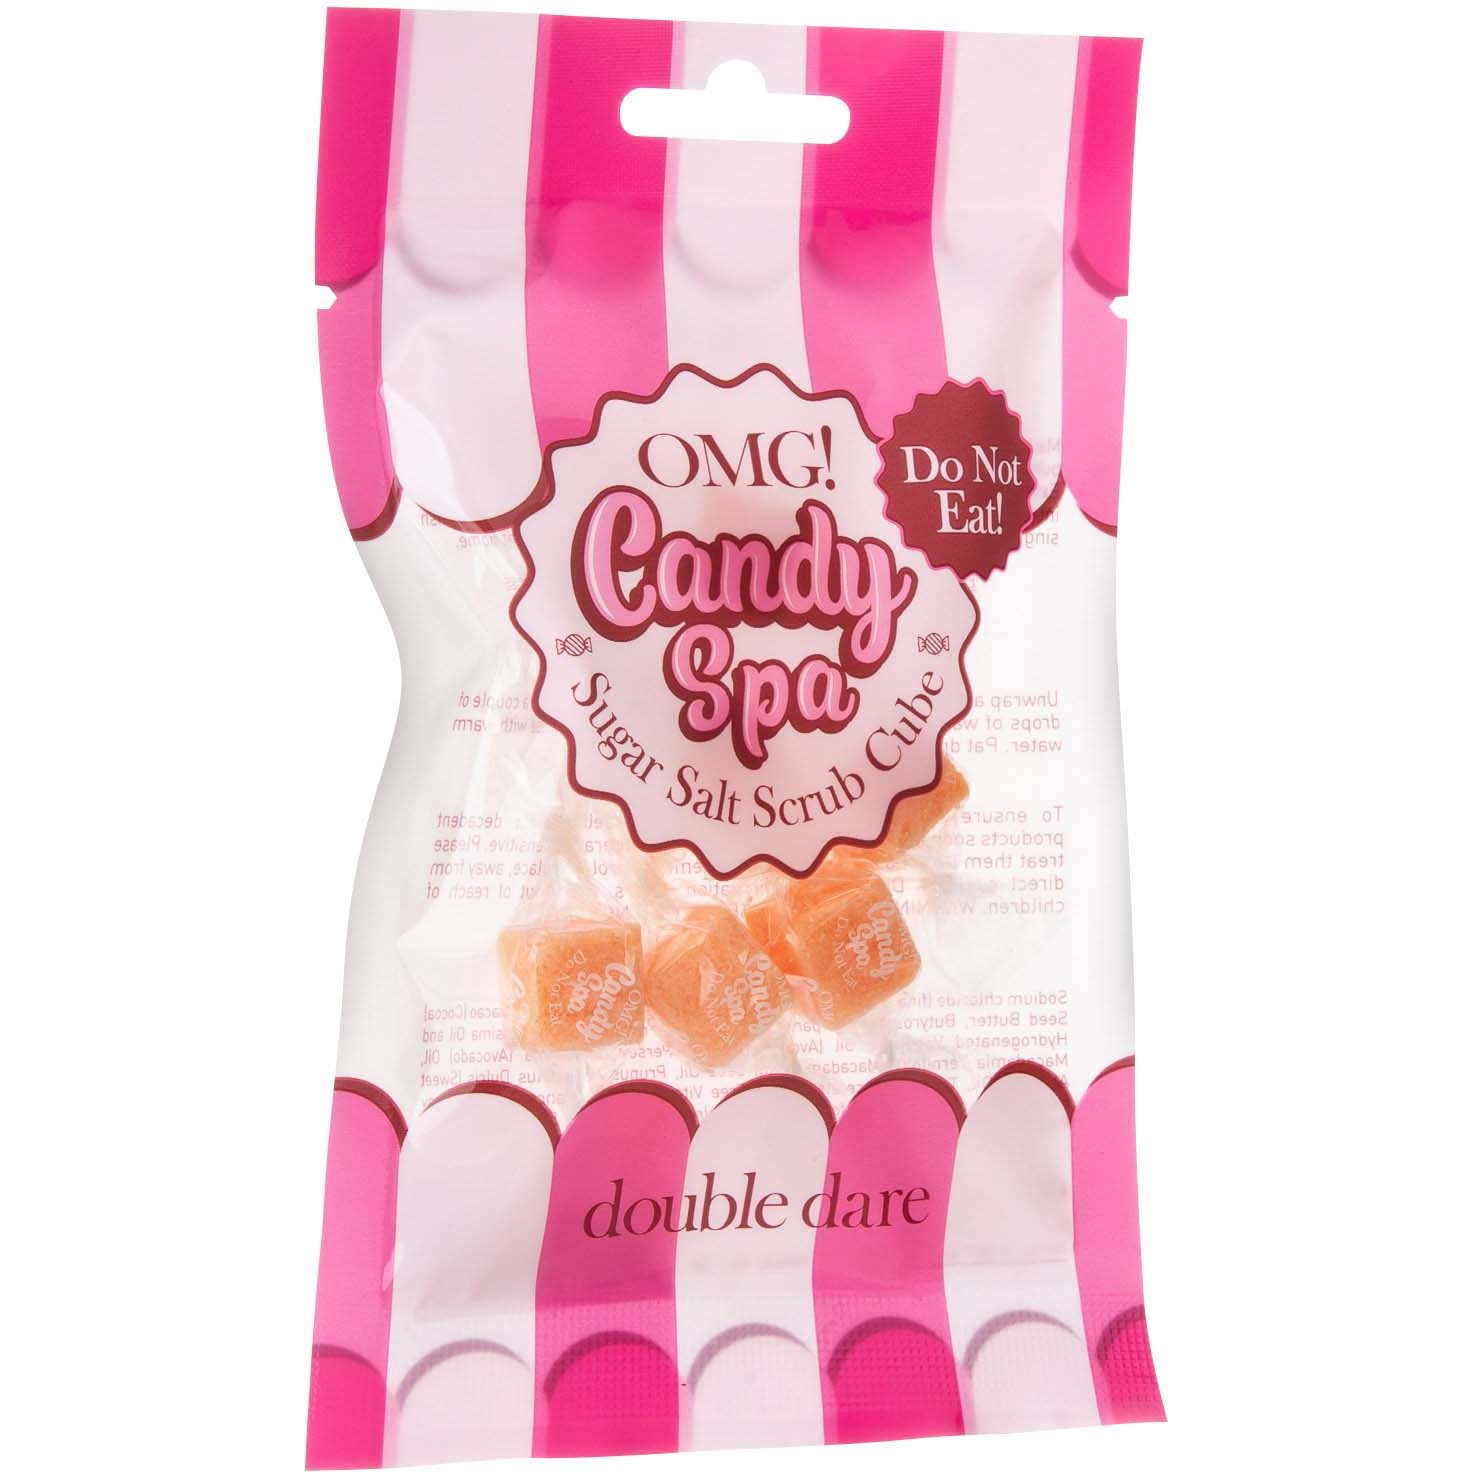 Bilde av Omg! Double Dare Candy Spa: Sugar Salt Scrub Cube #04 Sweet Macadamia